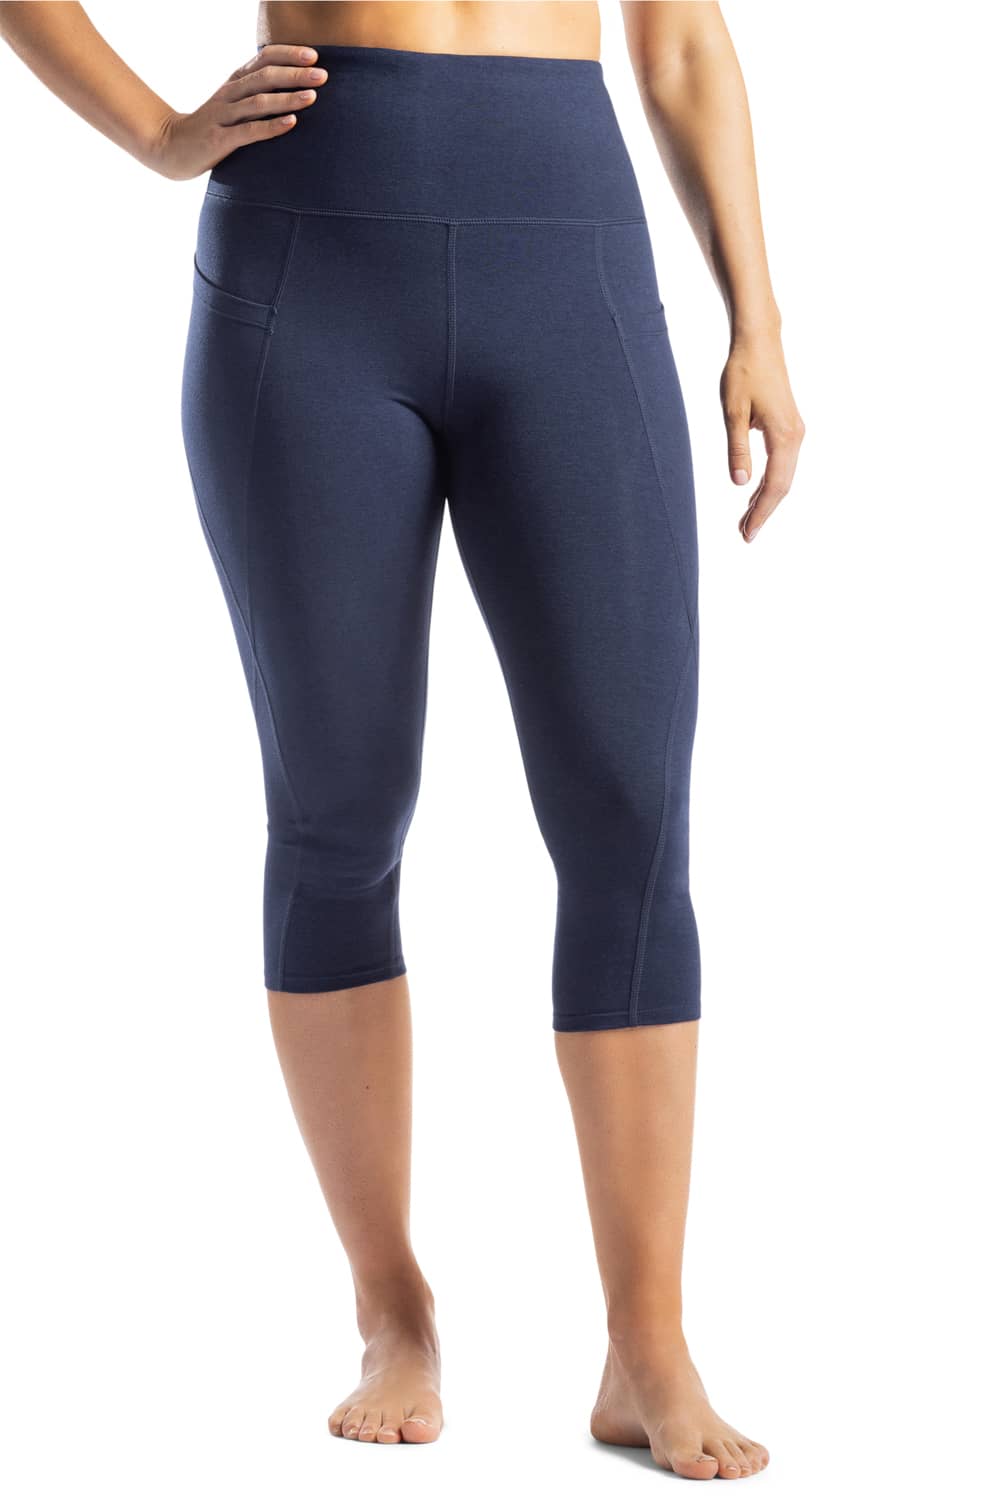 iLoveSIA Capri Yoga Pants For Women With Hidden Waistband Pocket